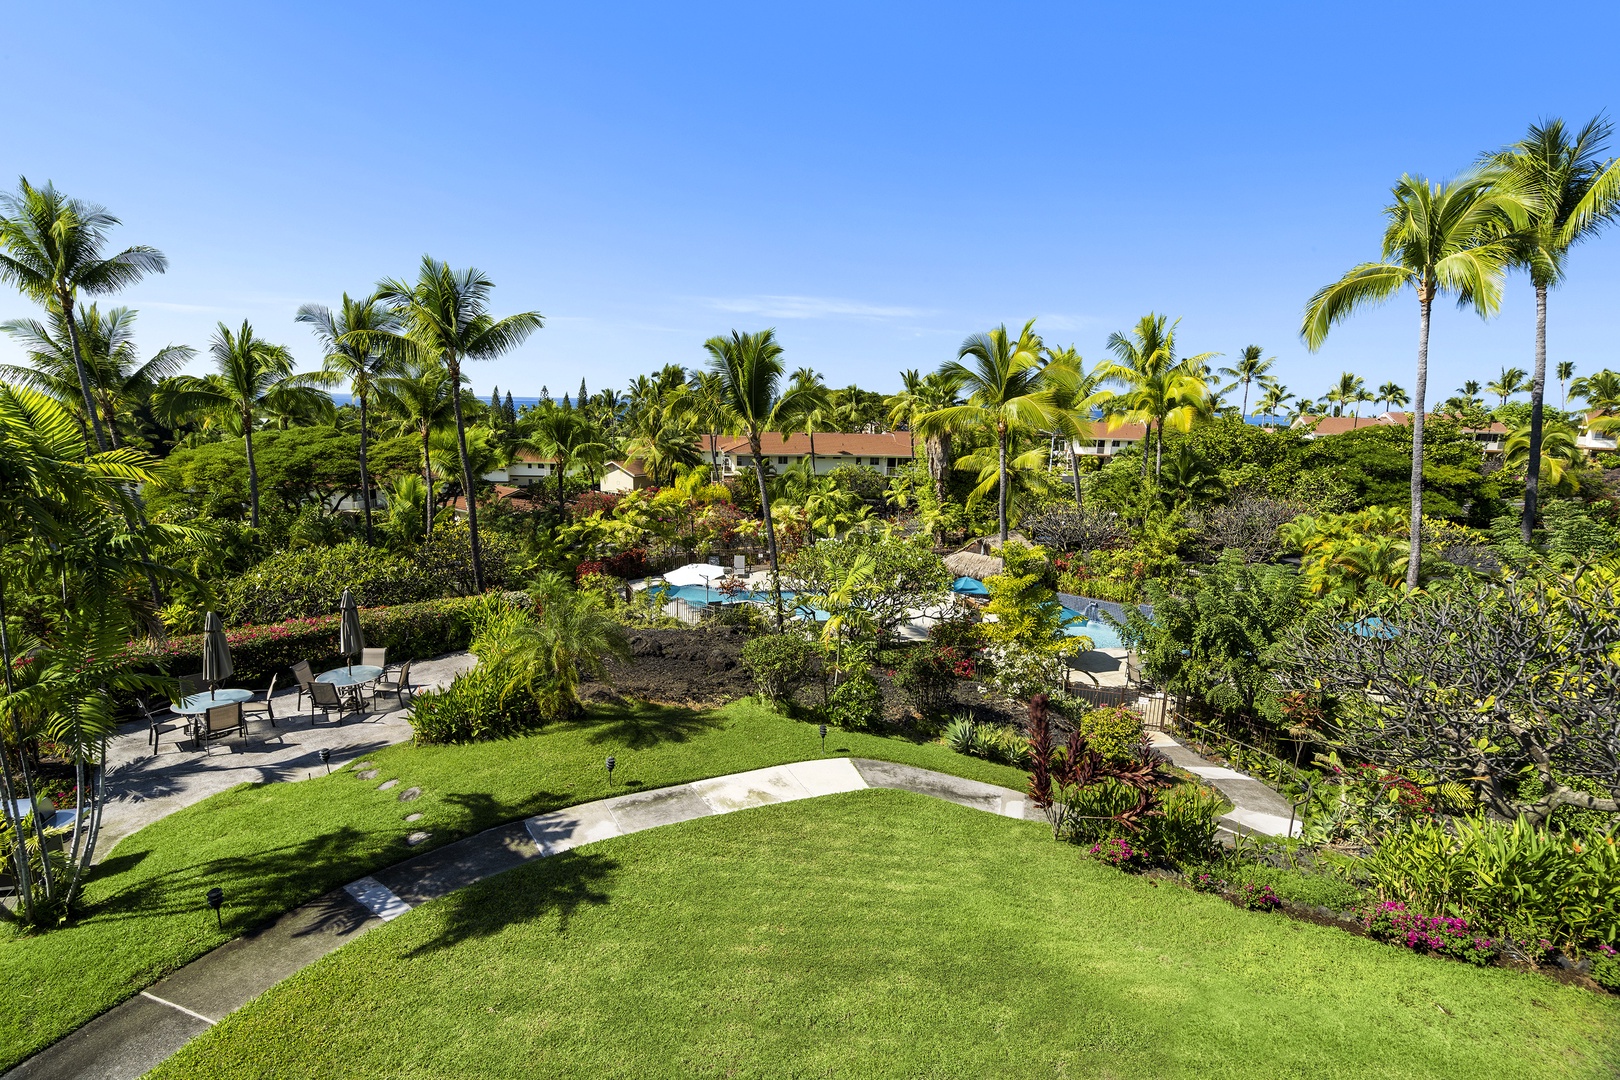 Kailua Kona Vacation Rentals, Keauhou Resort 125 - Views from the Lanai